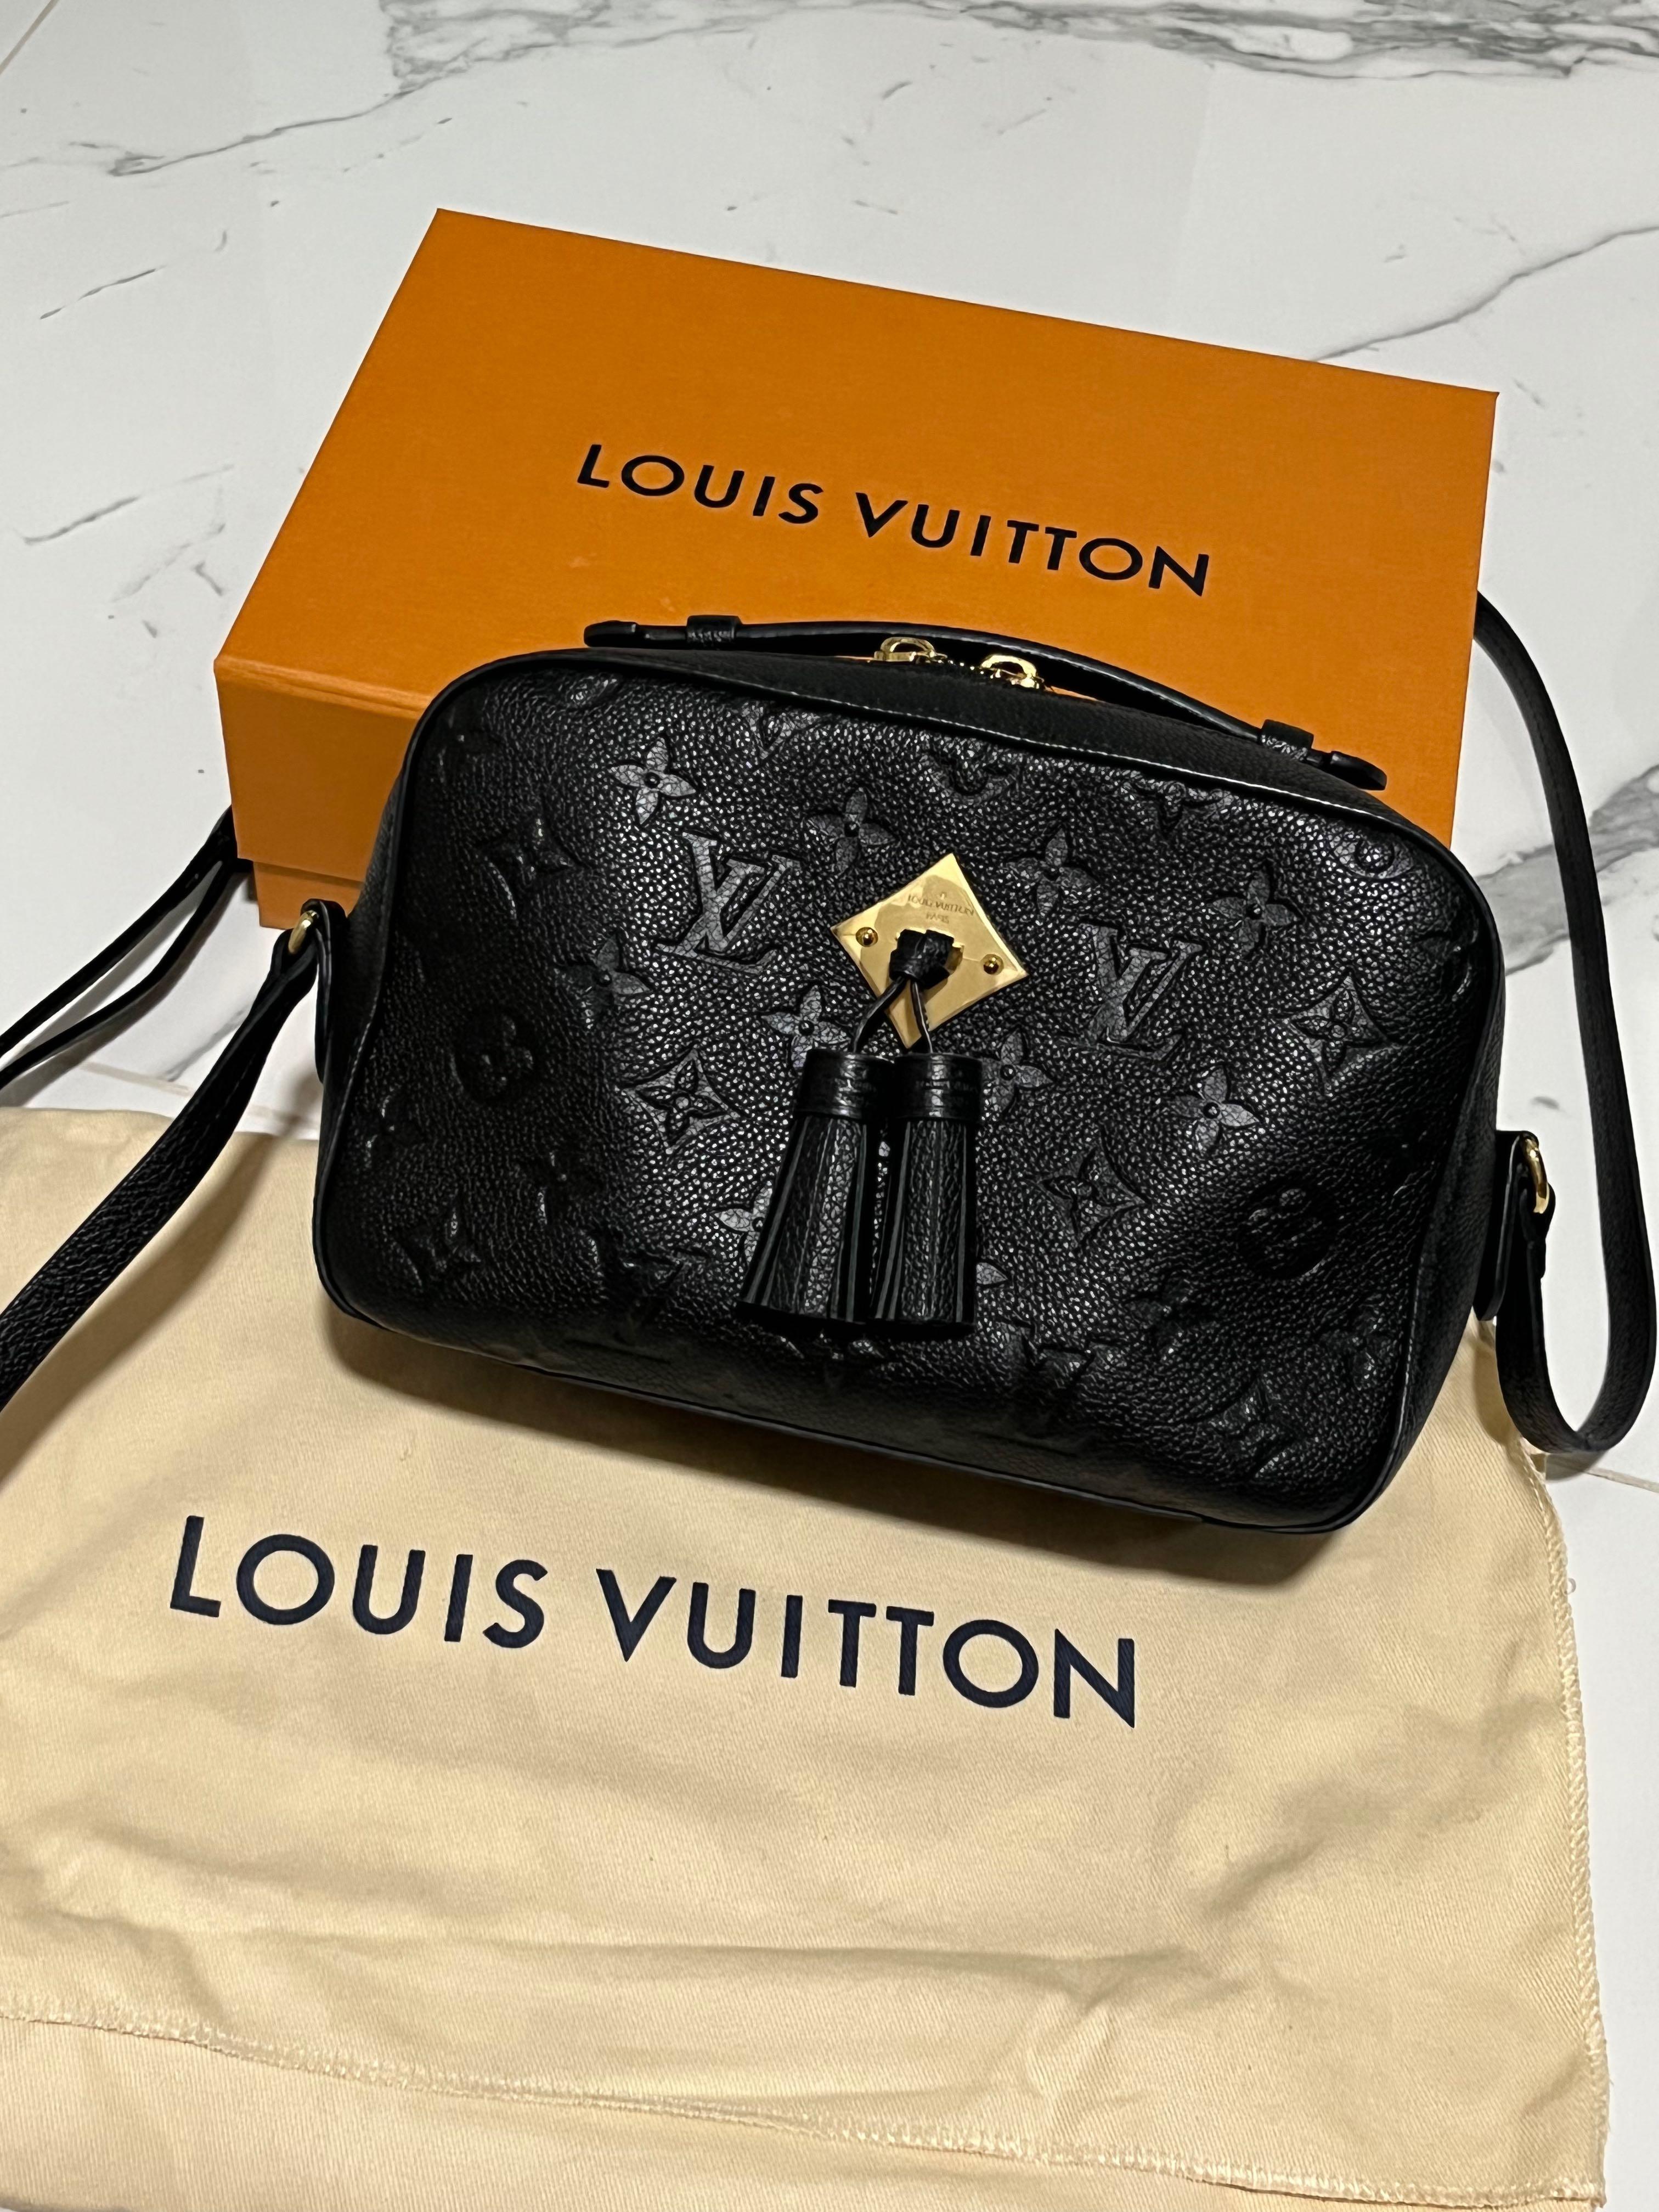 Sold New Louis Vuitton Empreinte Saintonge